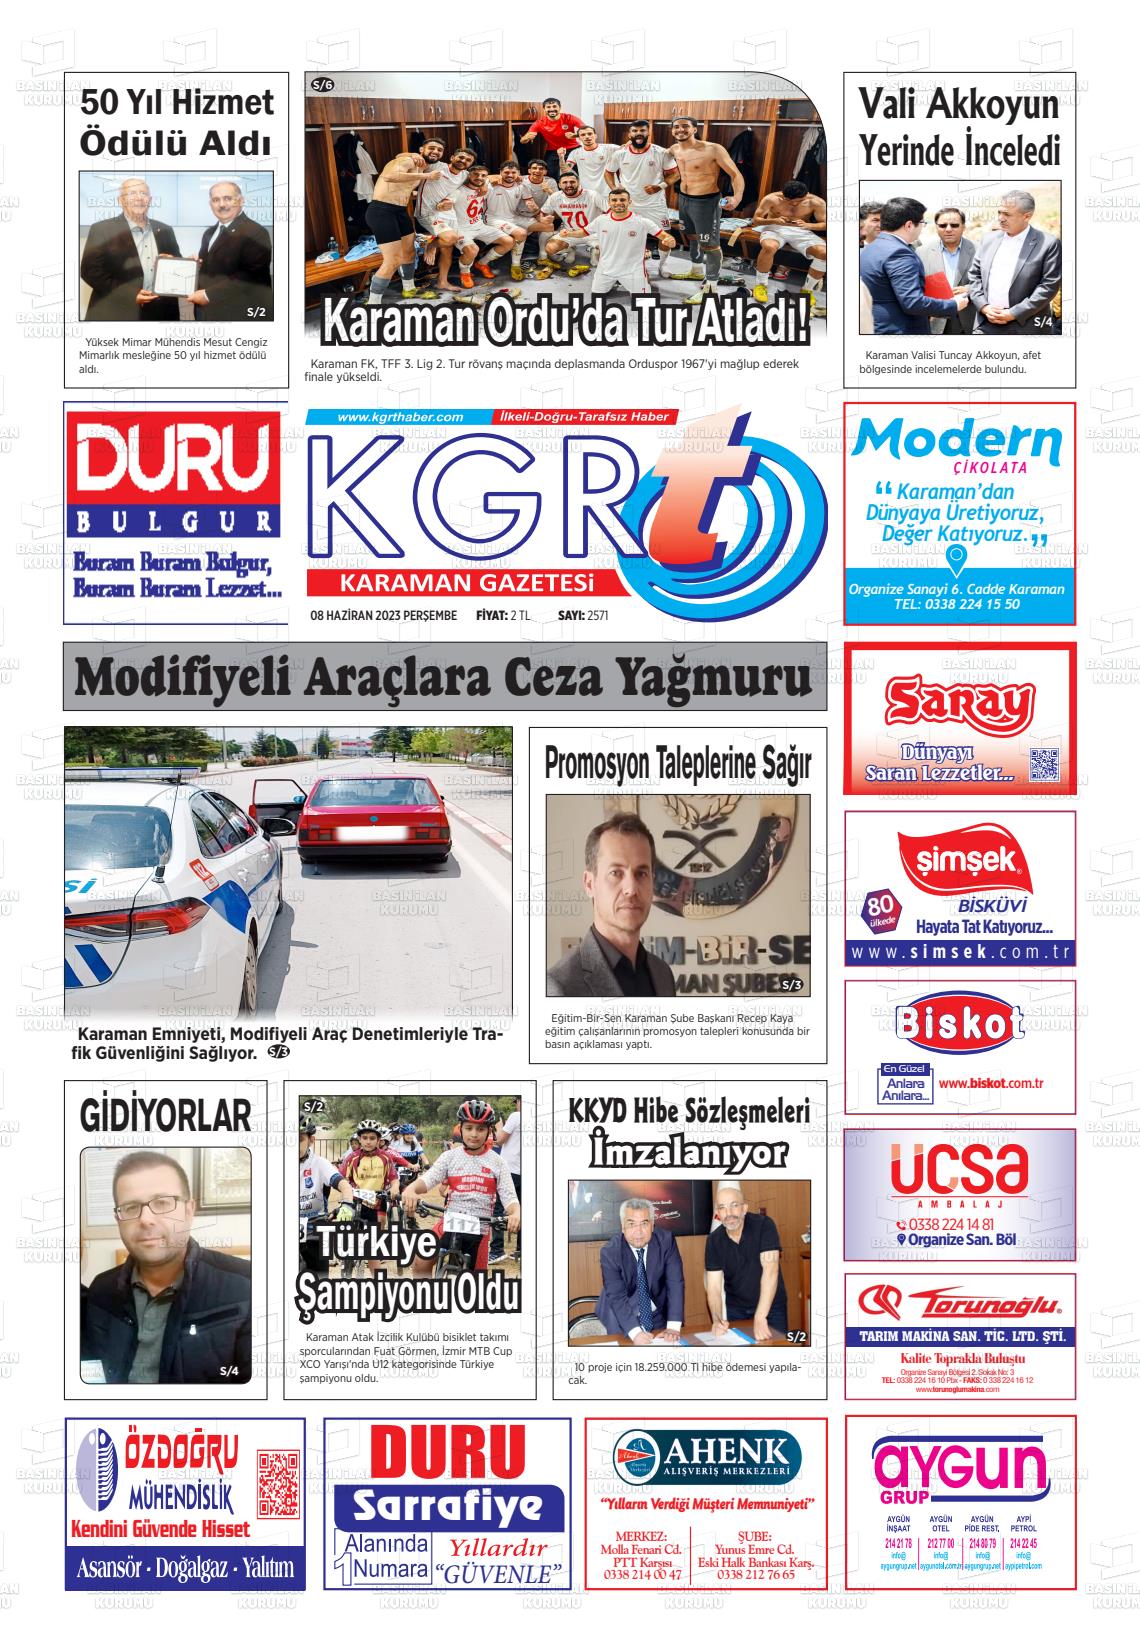 08 Haziran 2023 Kgrt Karaman Gazete Manşeti